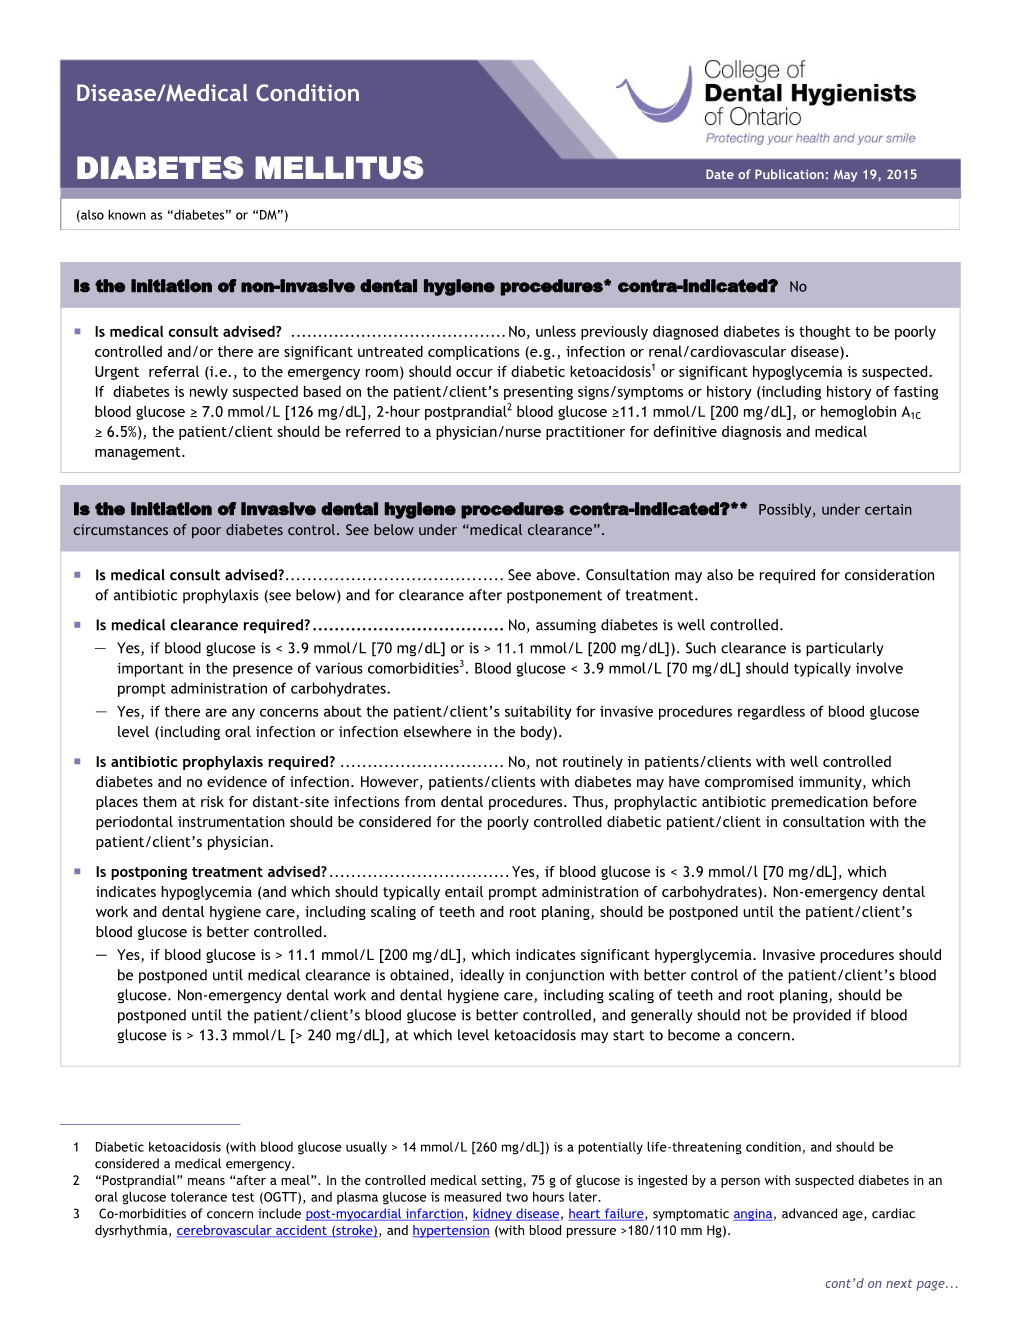 CDHO Factsheet Diabetes Mellitus